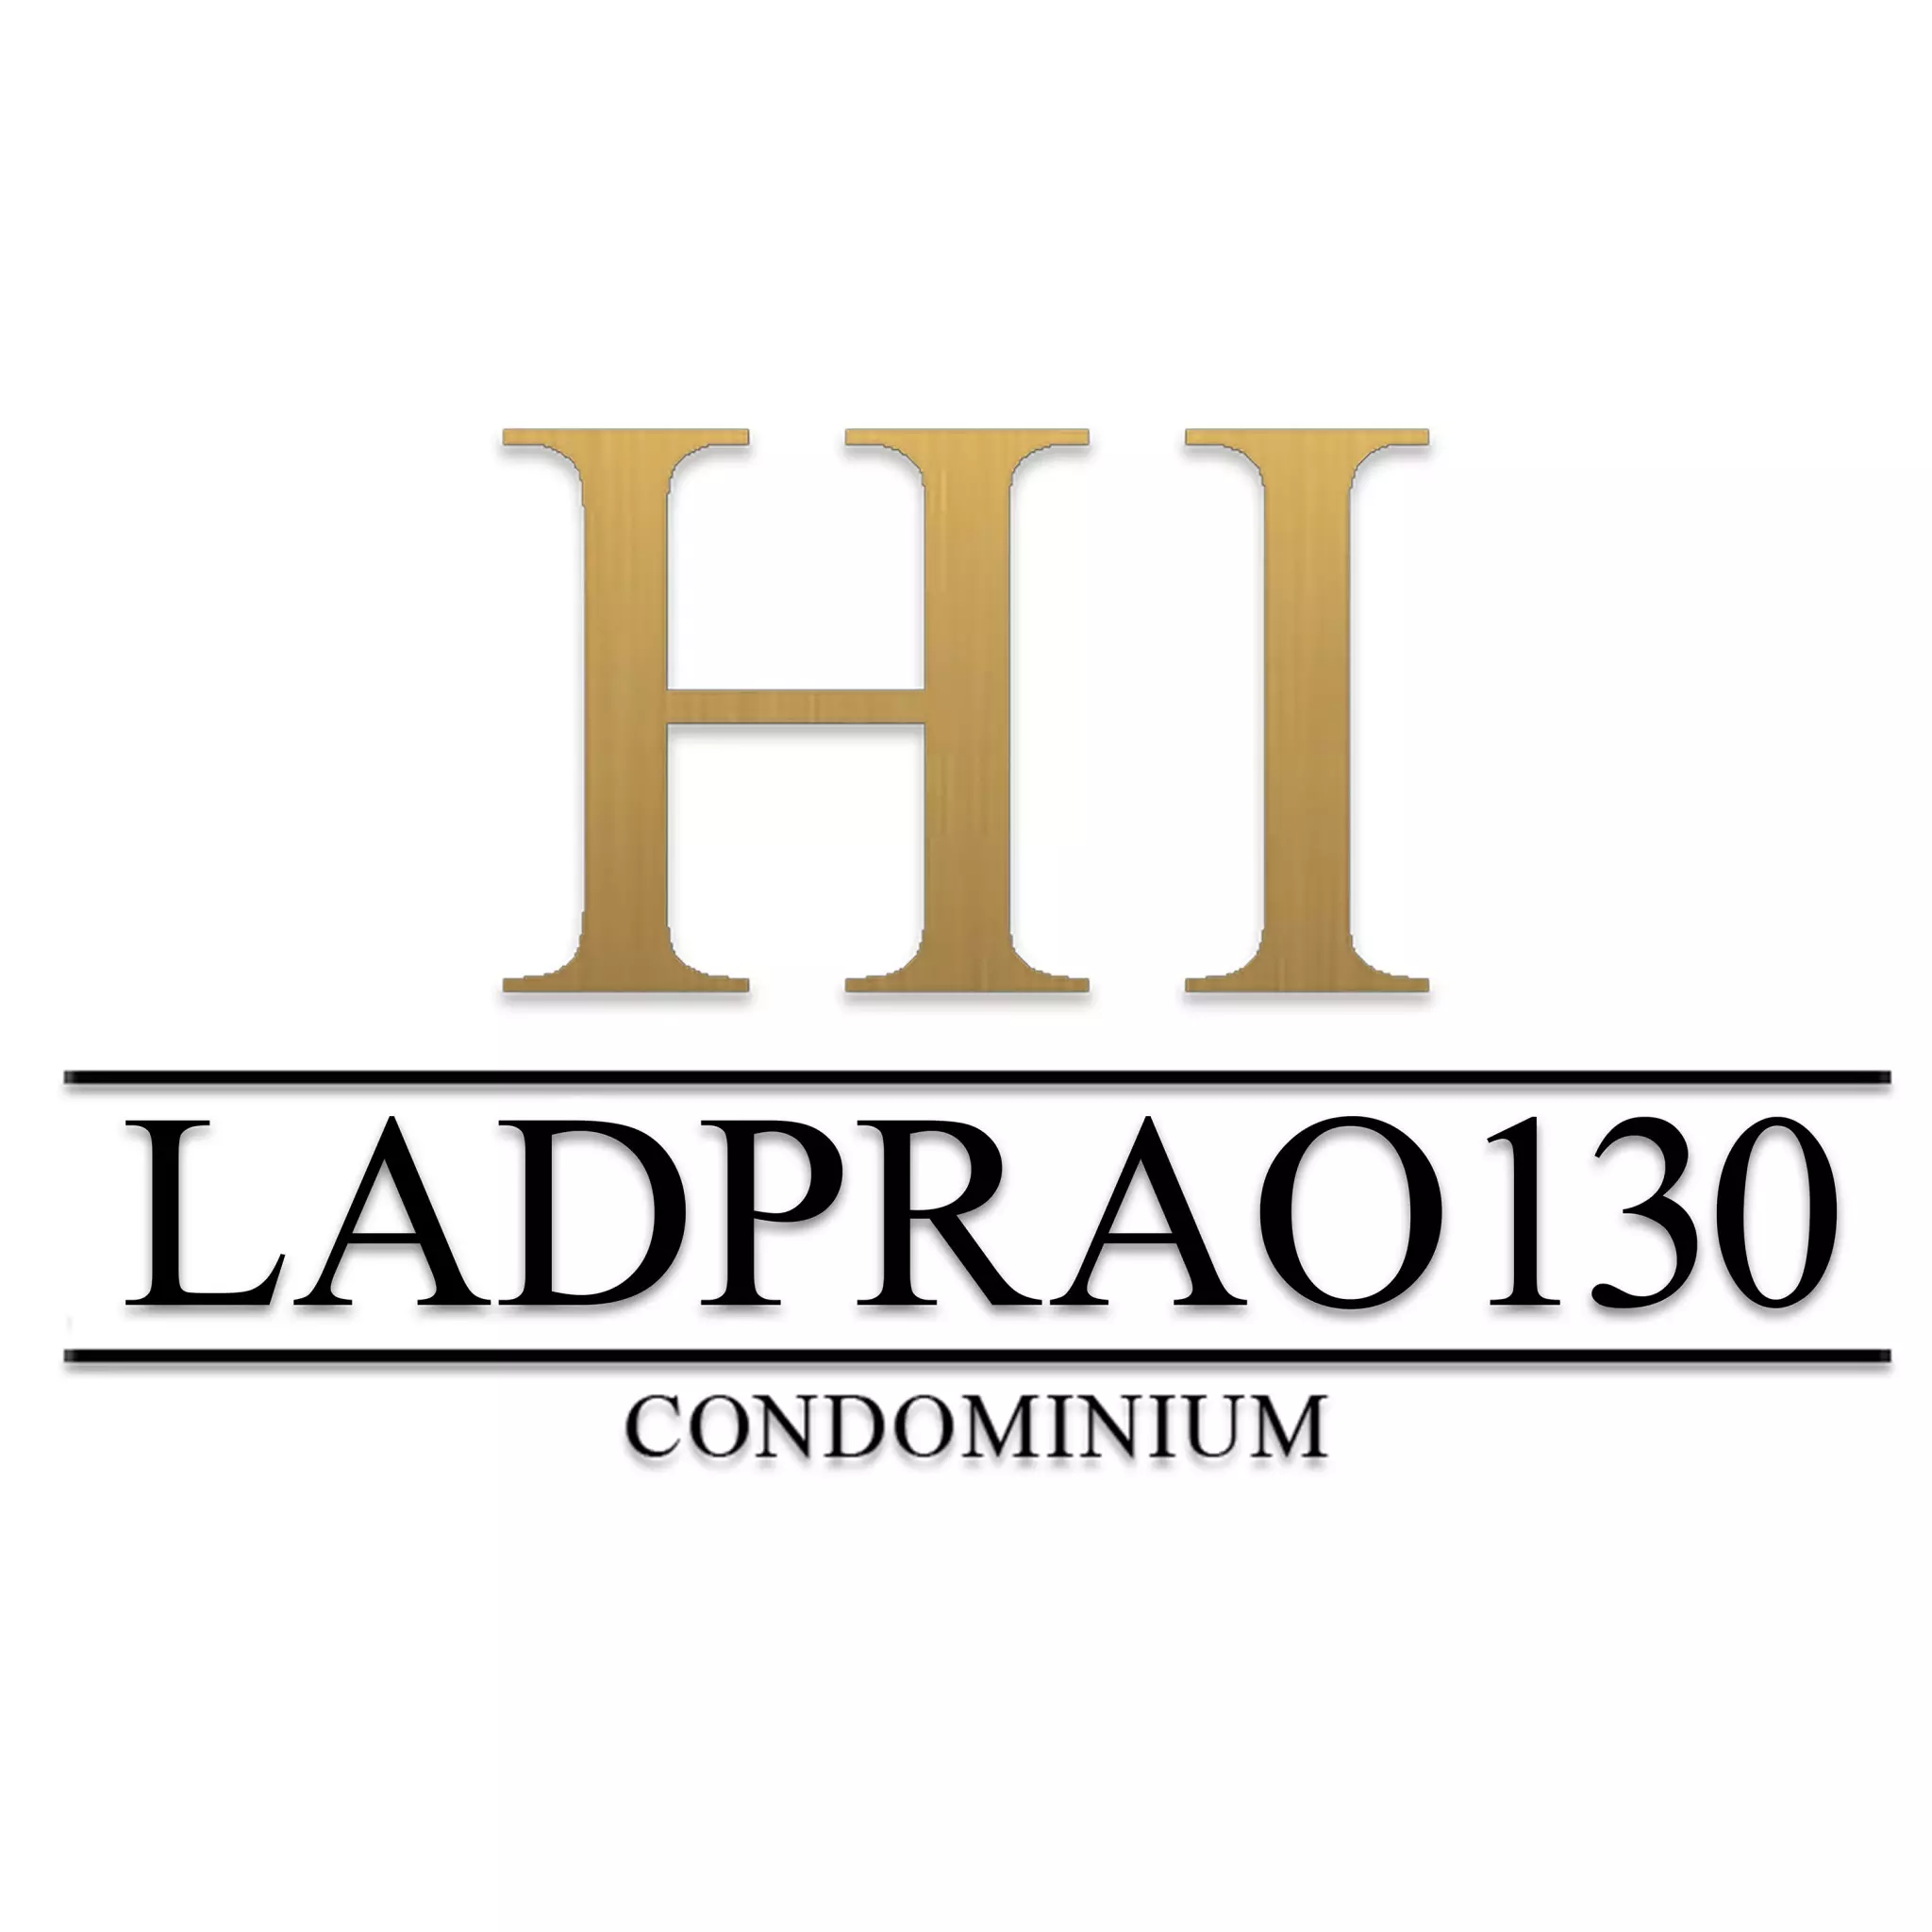 hi-ladprao131